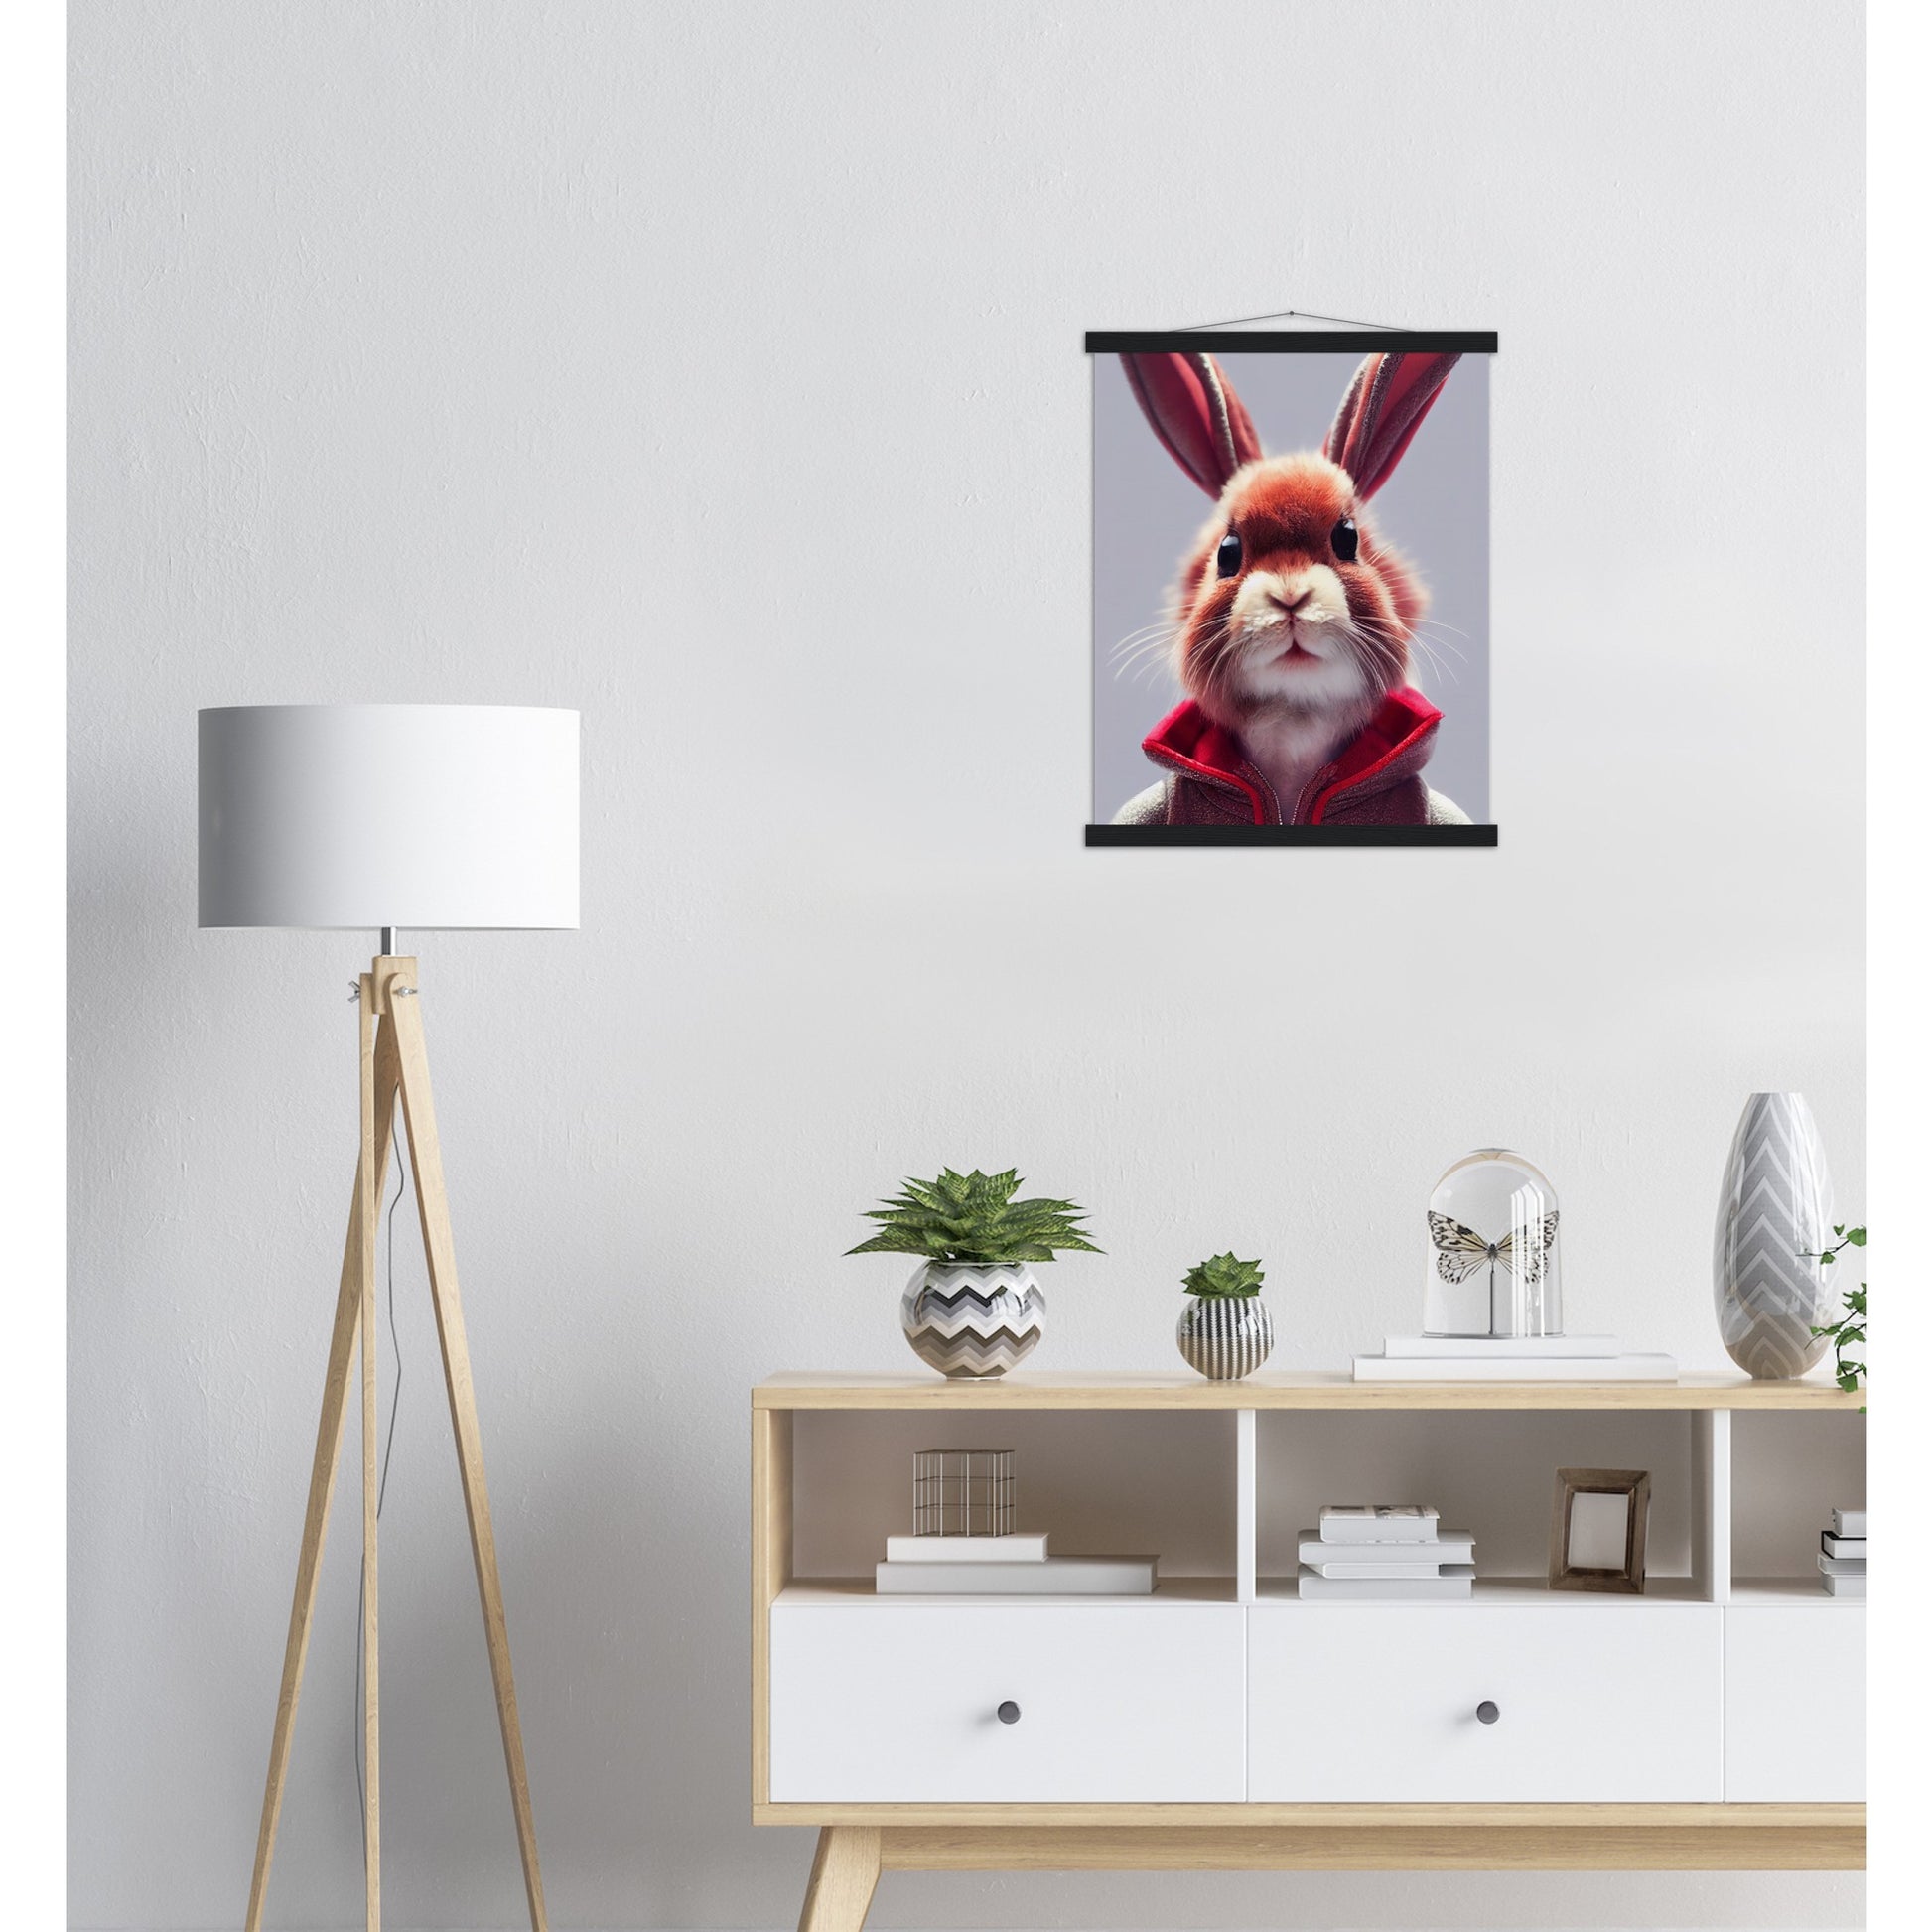 Poster mit Leisten (Holz)- Museumsqualität - Bunny in grey red tracksuit - "Julius" - personalized mug - customized mug - Cute rabbit - Marke:- Pixelboys - Brand - Art Prints - Marke - Wandkunst - Papierstärke: 250g/qm - Wall Art - Bunny crew - Skater Betty - Hasen Gang - Original - Künstler:Pixelboys - Poster with frame - Office Poster - Acrylkunst - Trend - Wandschmuck - Acrylbild - Atelier Canada - 